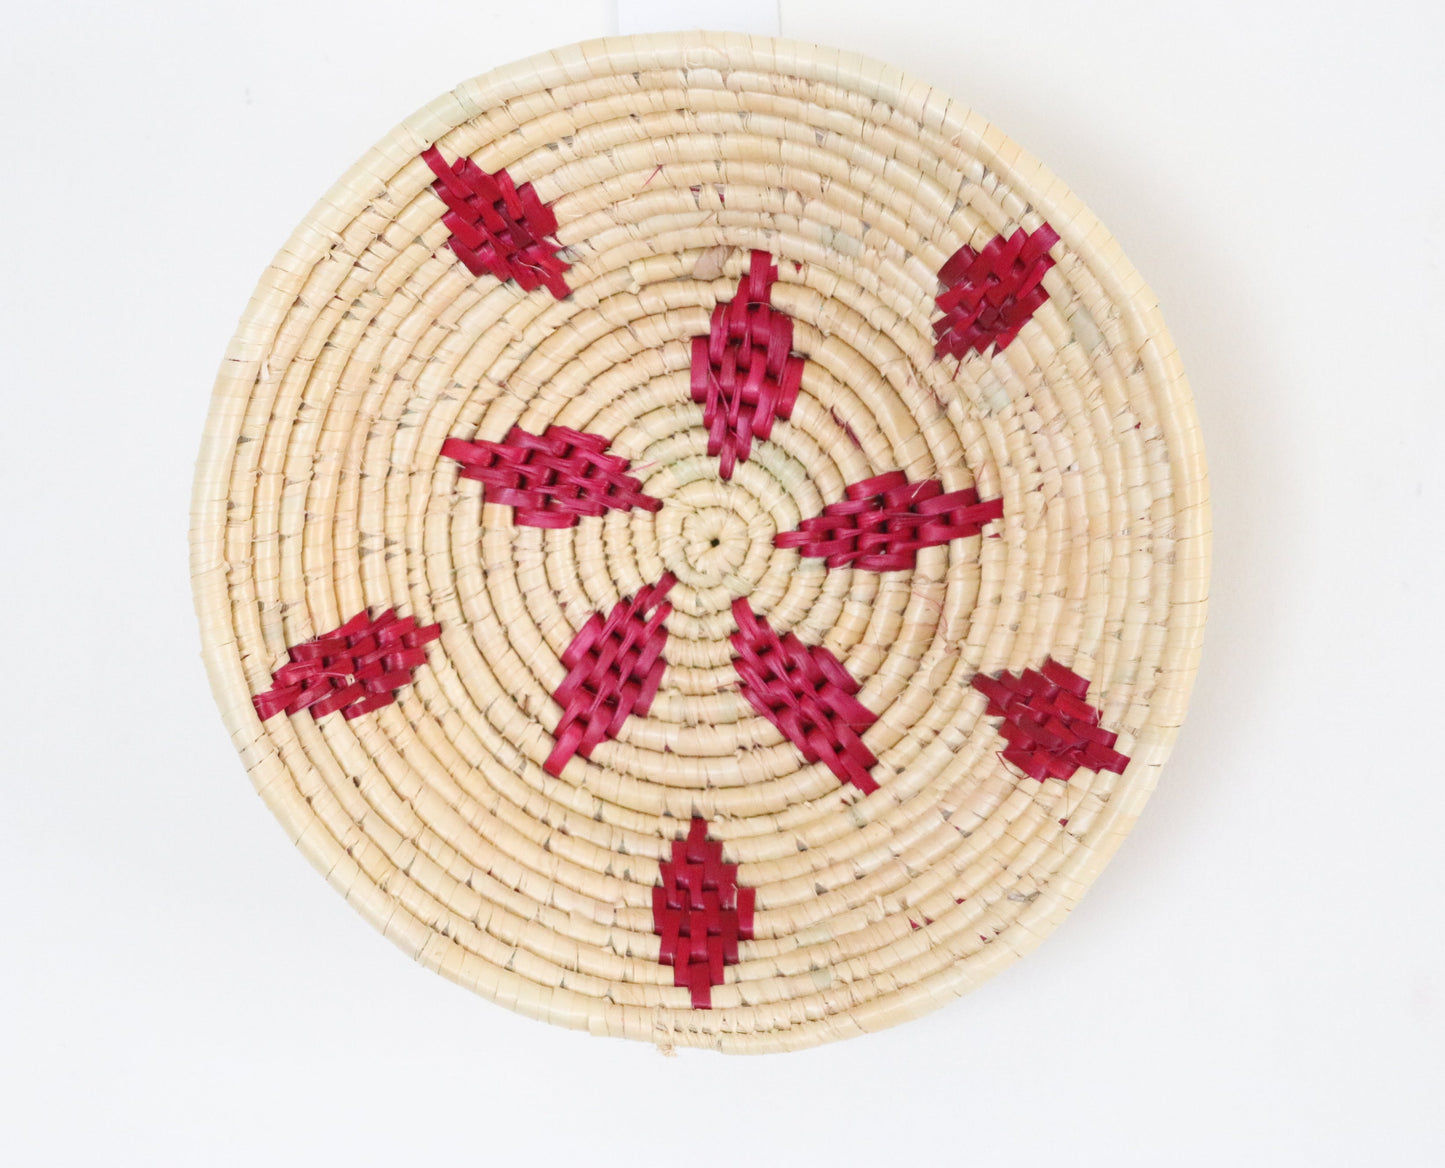 Decorative wall basket - Moonj grass basket - Wall basket for decor - Handwoven grass basket